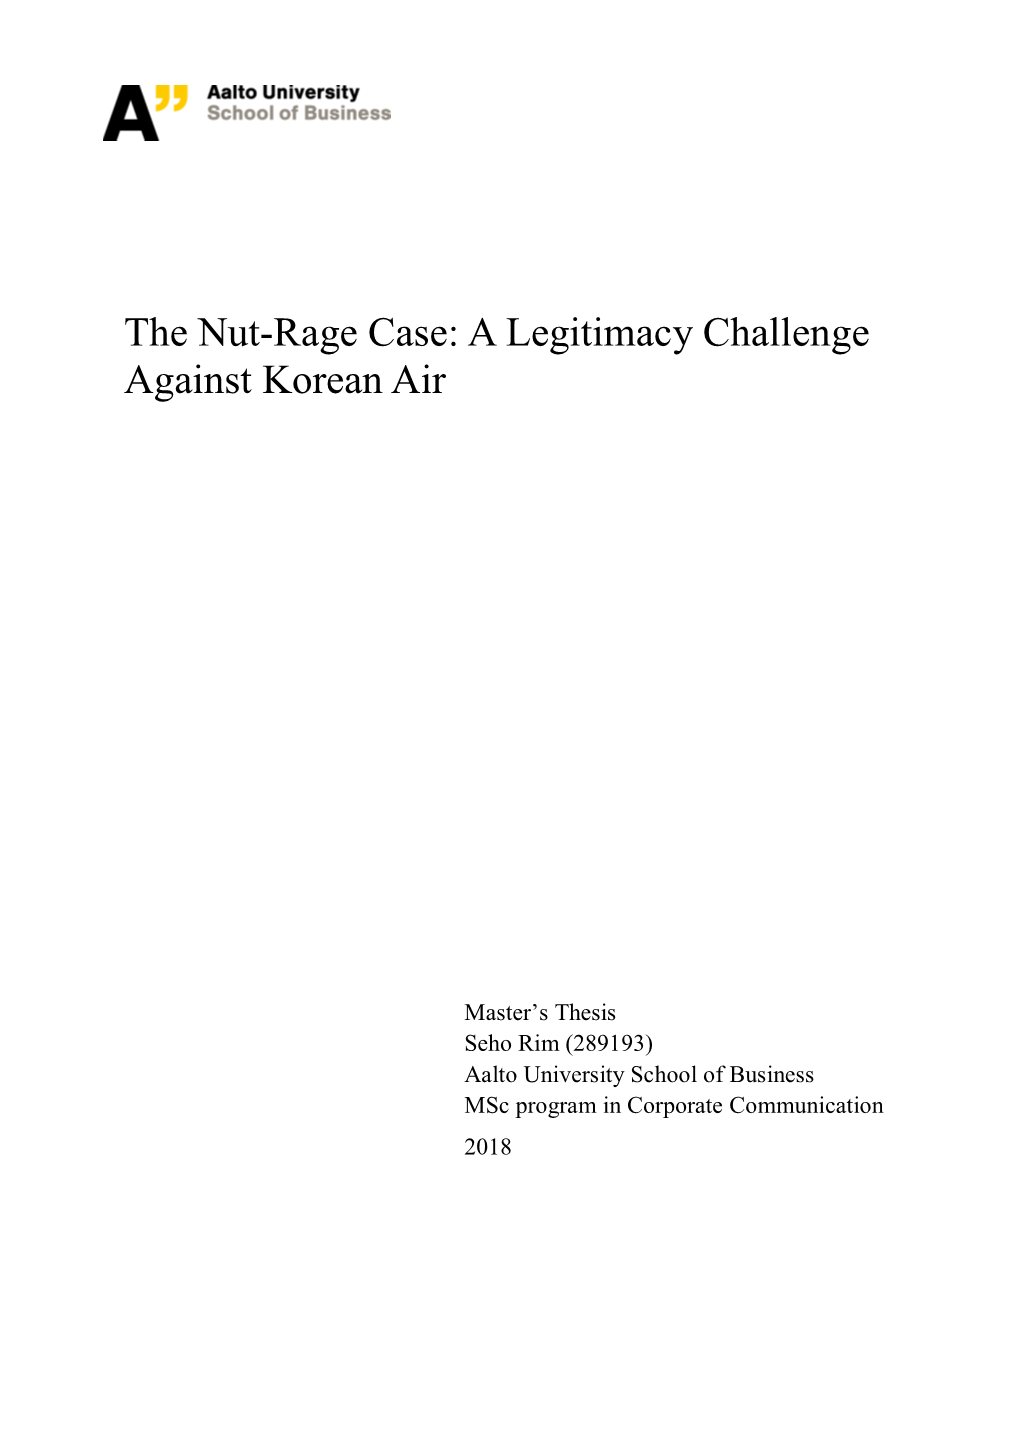 The Nut-Rage Case: Legitimacy Challenge to Korean